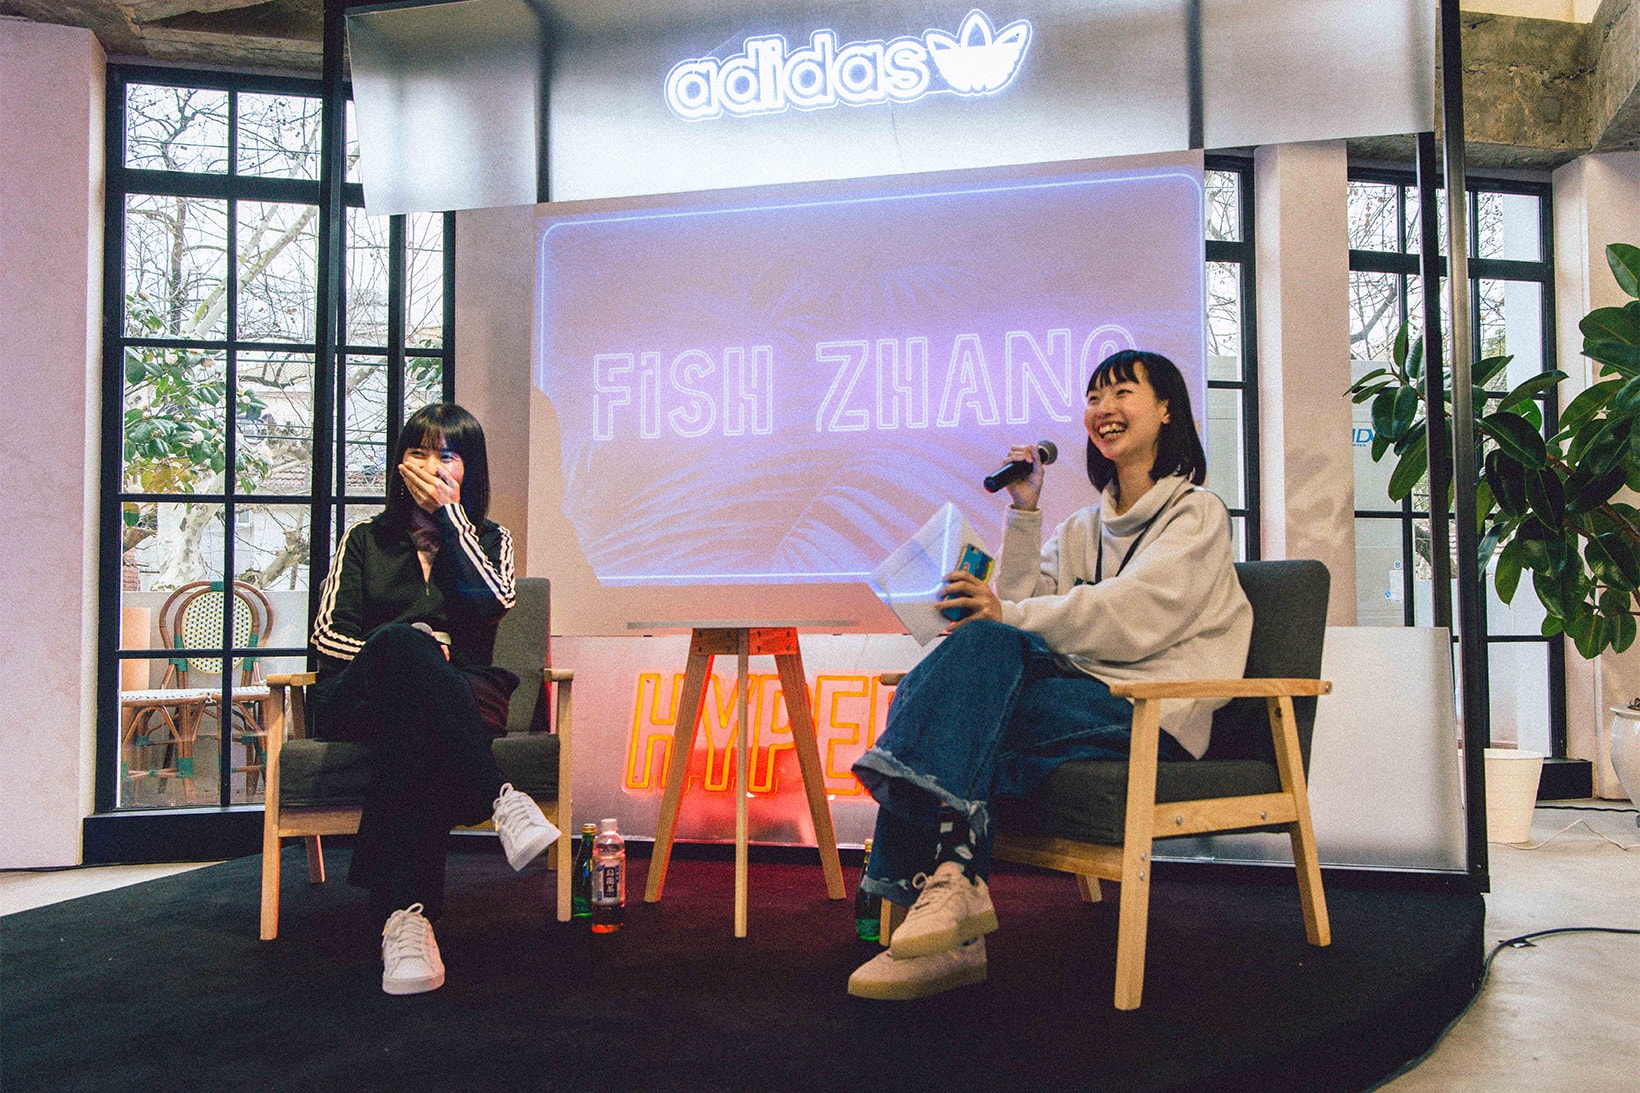 adidas originals sleek hypersleek shanghai popup recap china komi wednesday campanella fish zhang stars xu